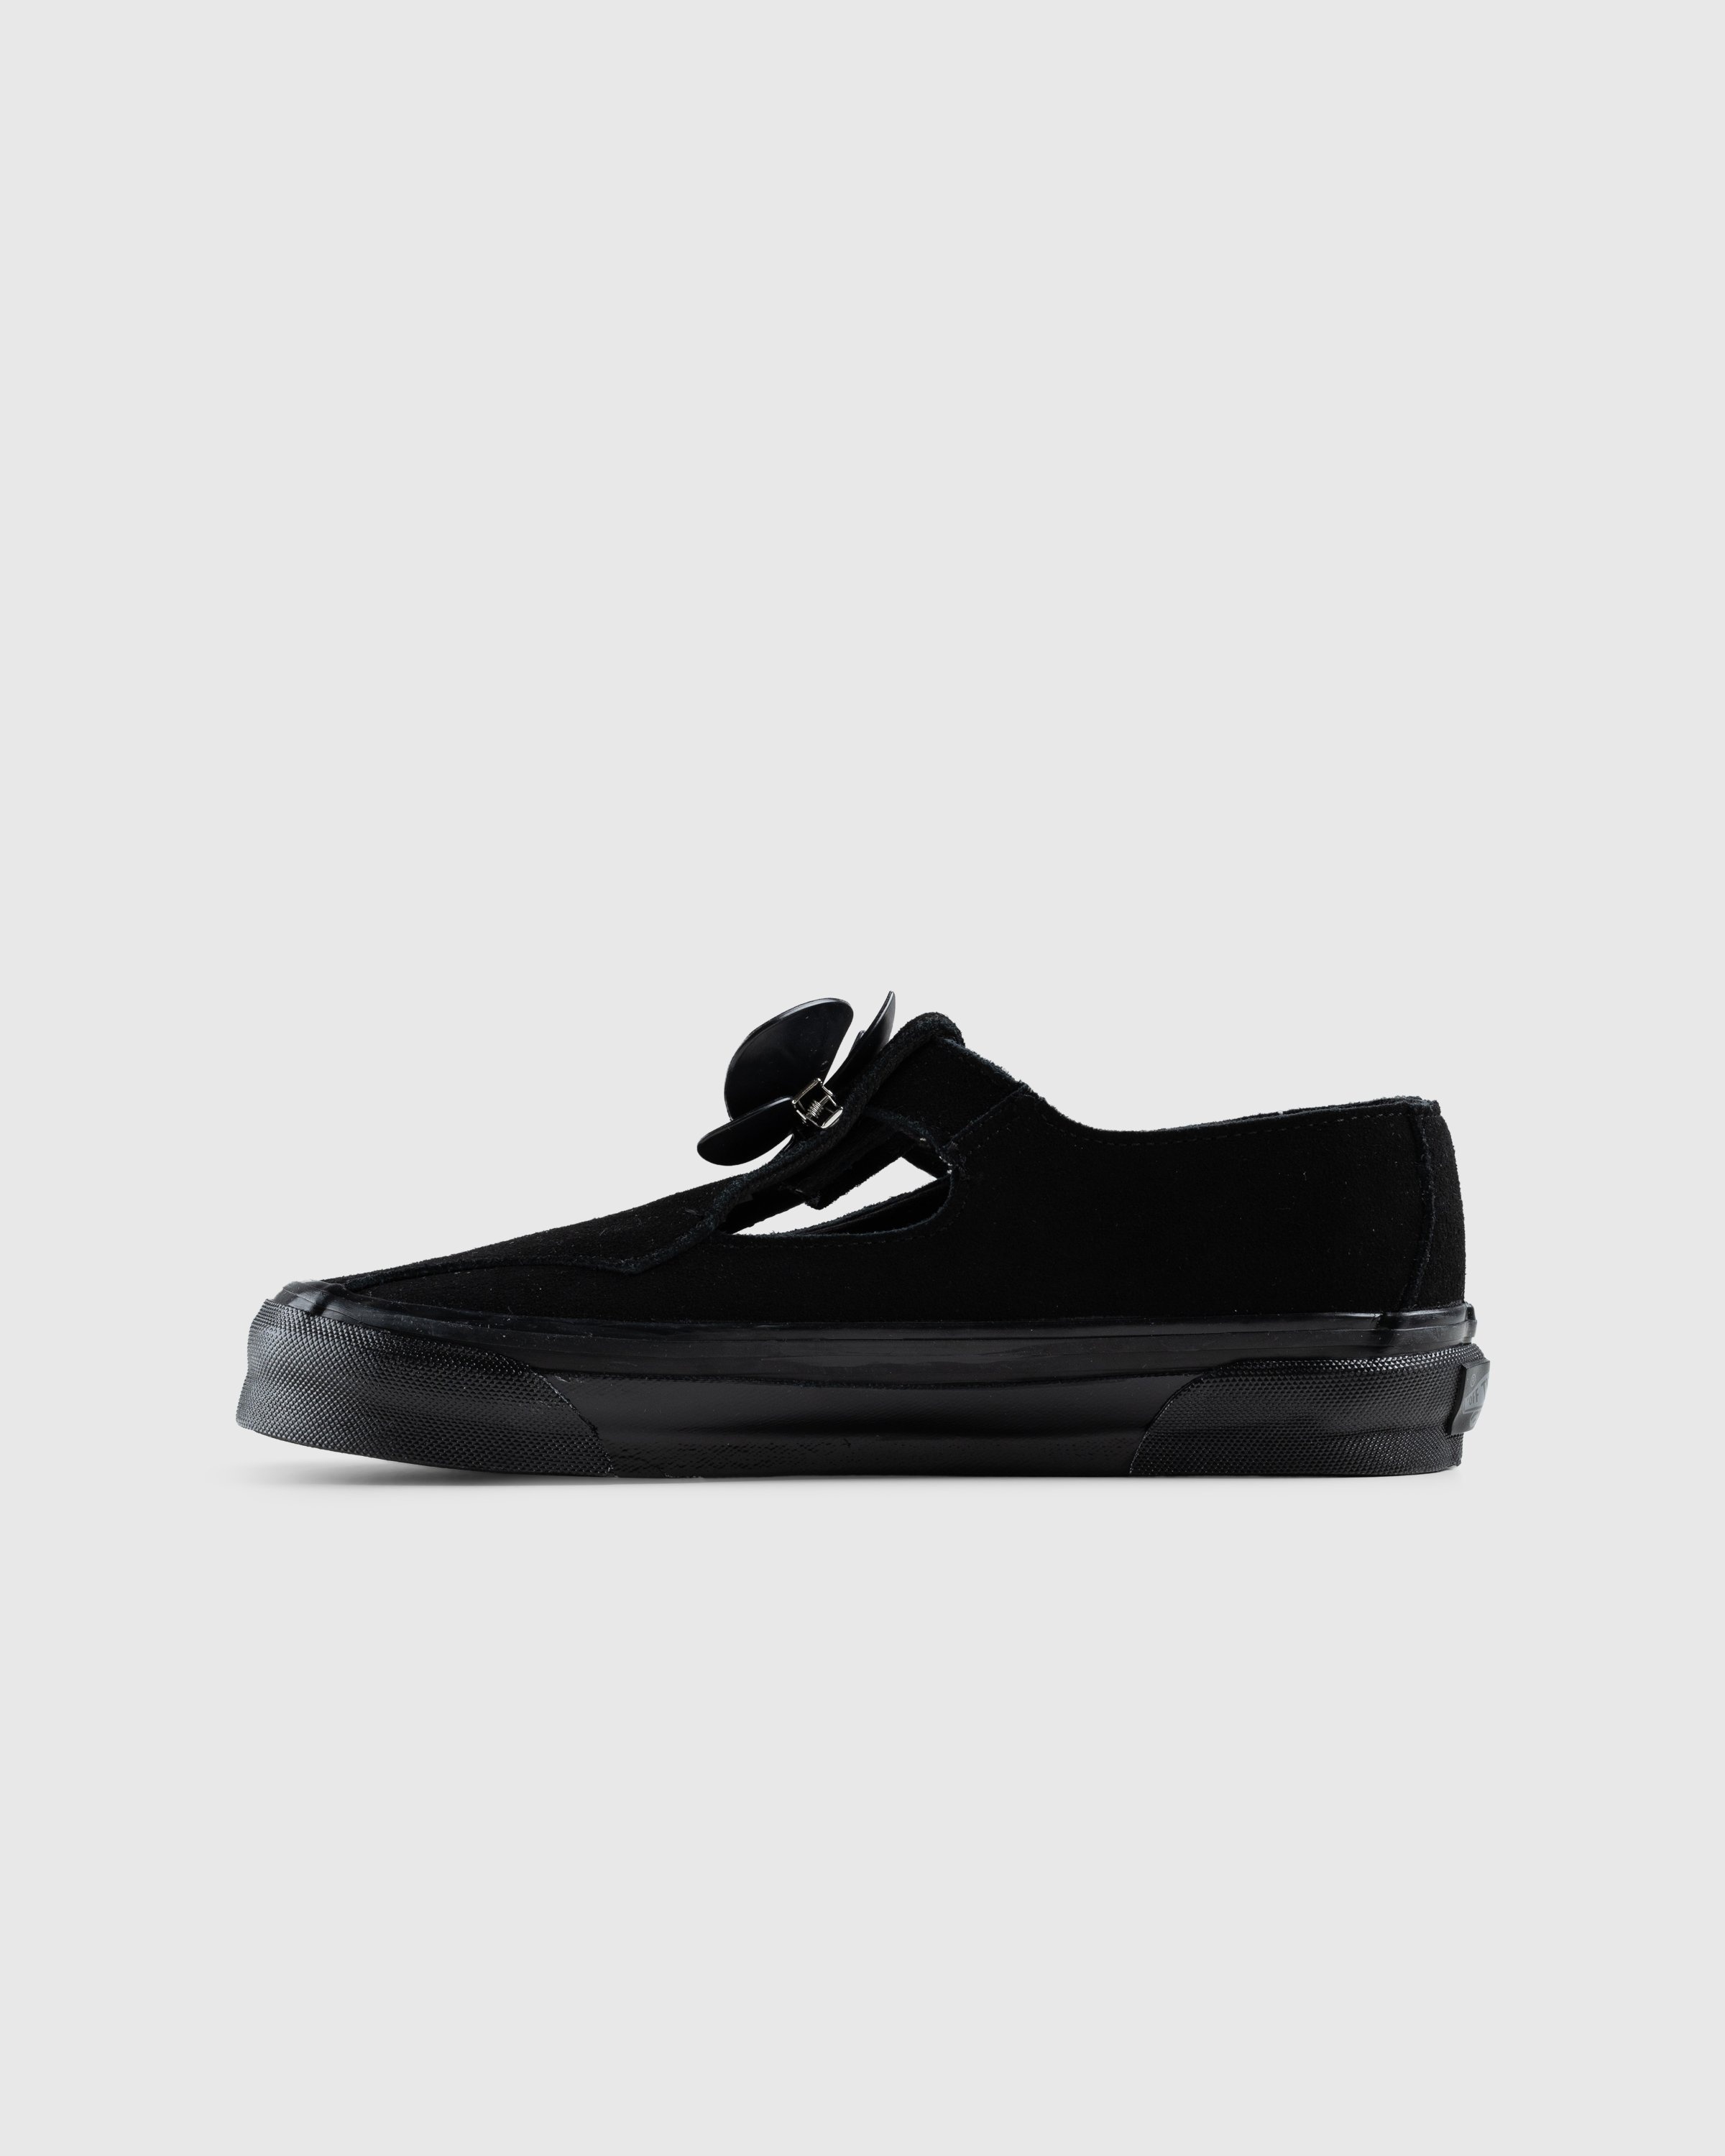 Vans – OG Style 93 LX Black - Sneakers - Black - Image 2